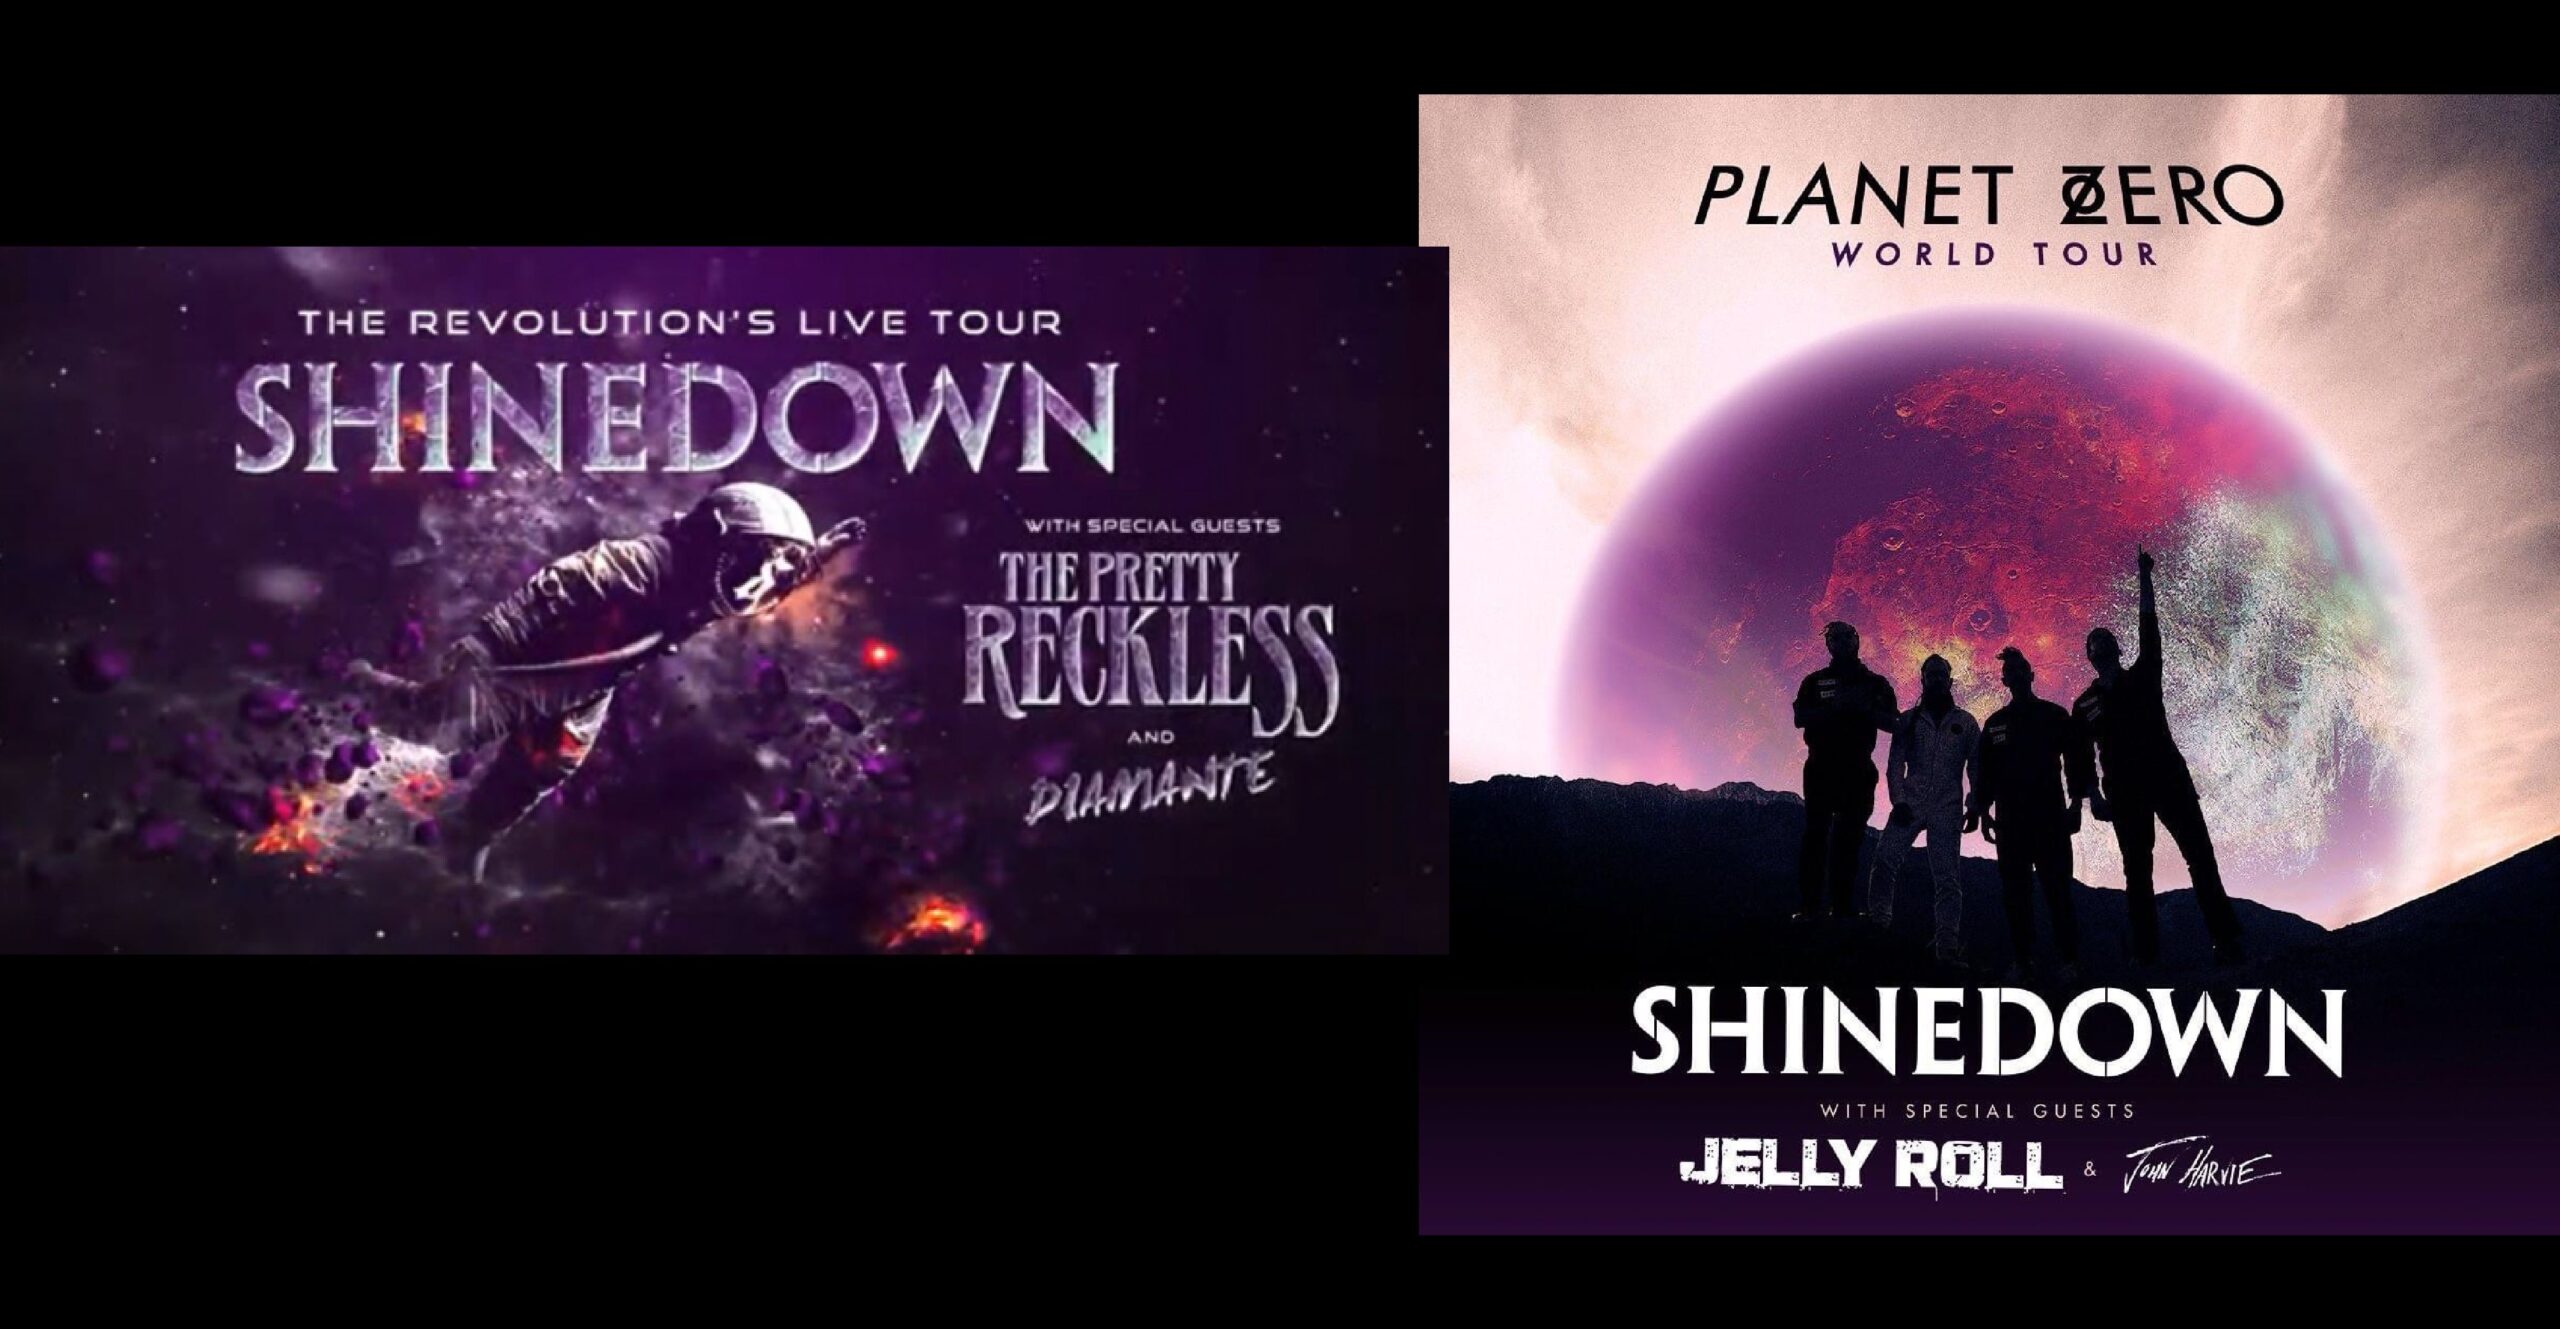 30 Shinedown ideas  shinedown lyrics, music is life, great song lyrics